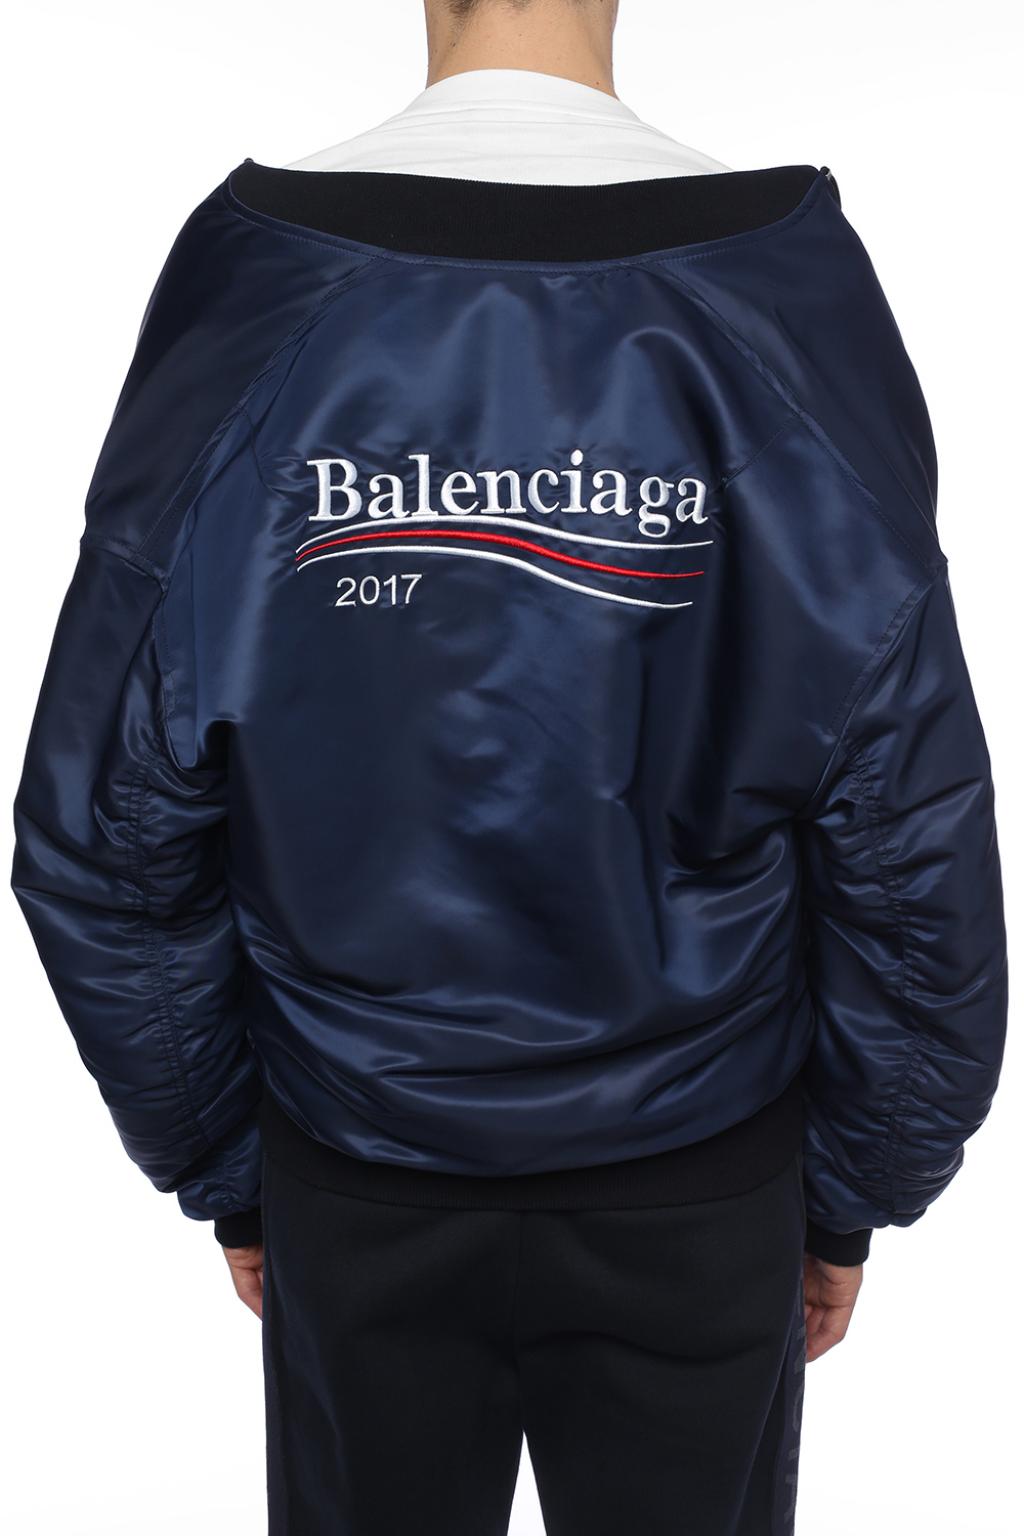 balenciaga 2017 bomber jacket